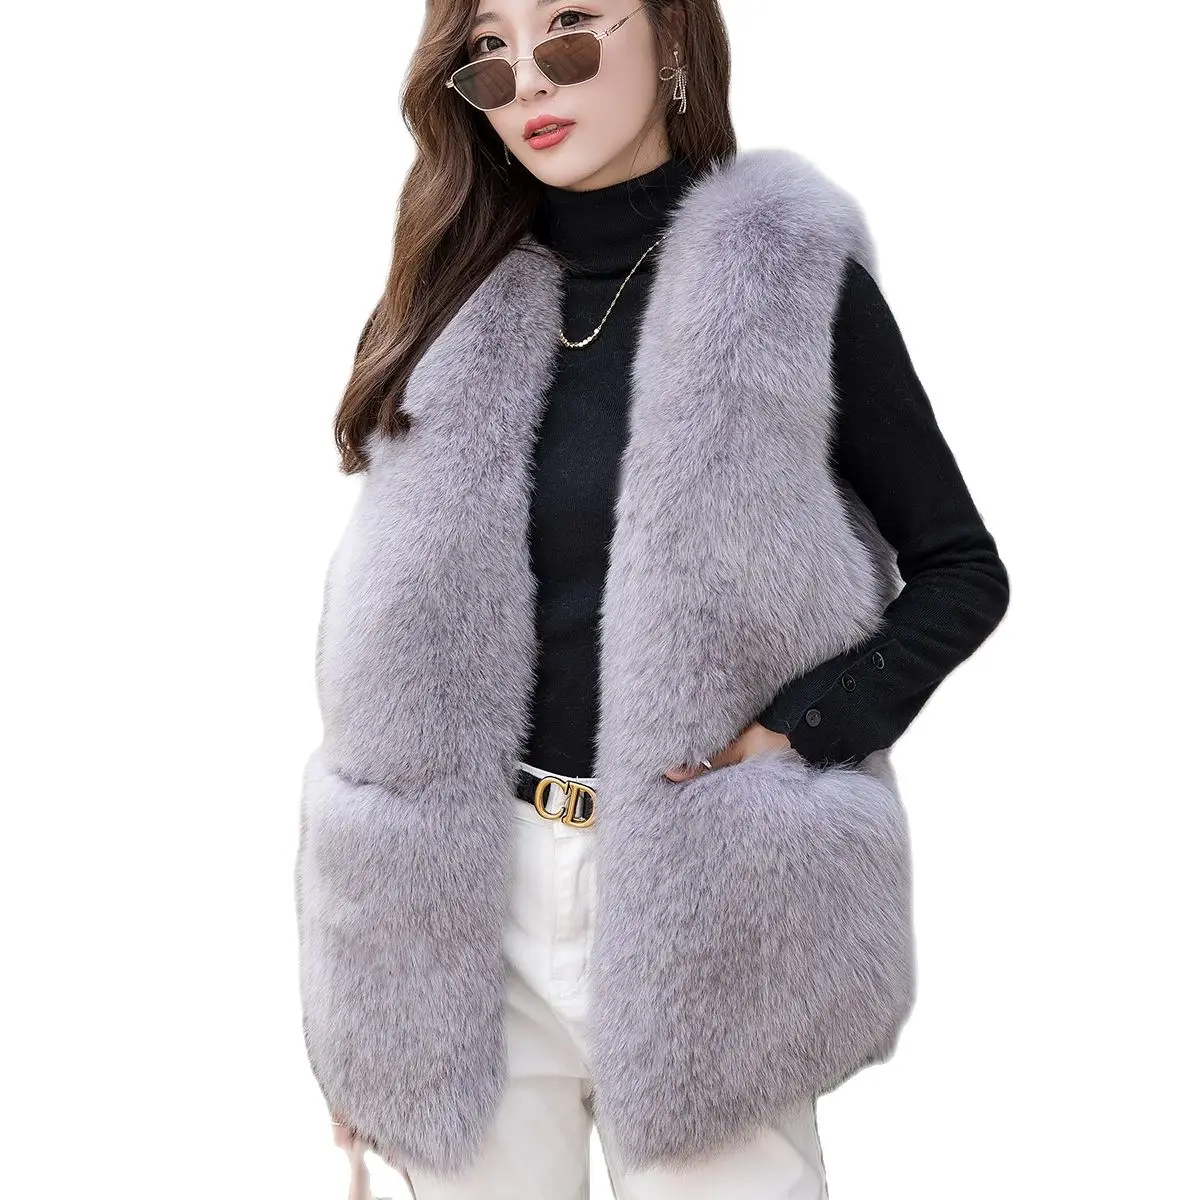 Natural fox fur waistcoat, full fur women's jacket, fox fur top, outer wear leather grass waistcoat, noble clothing